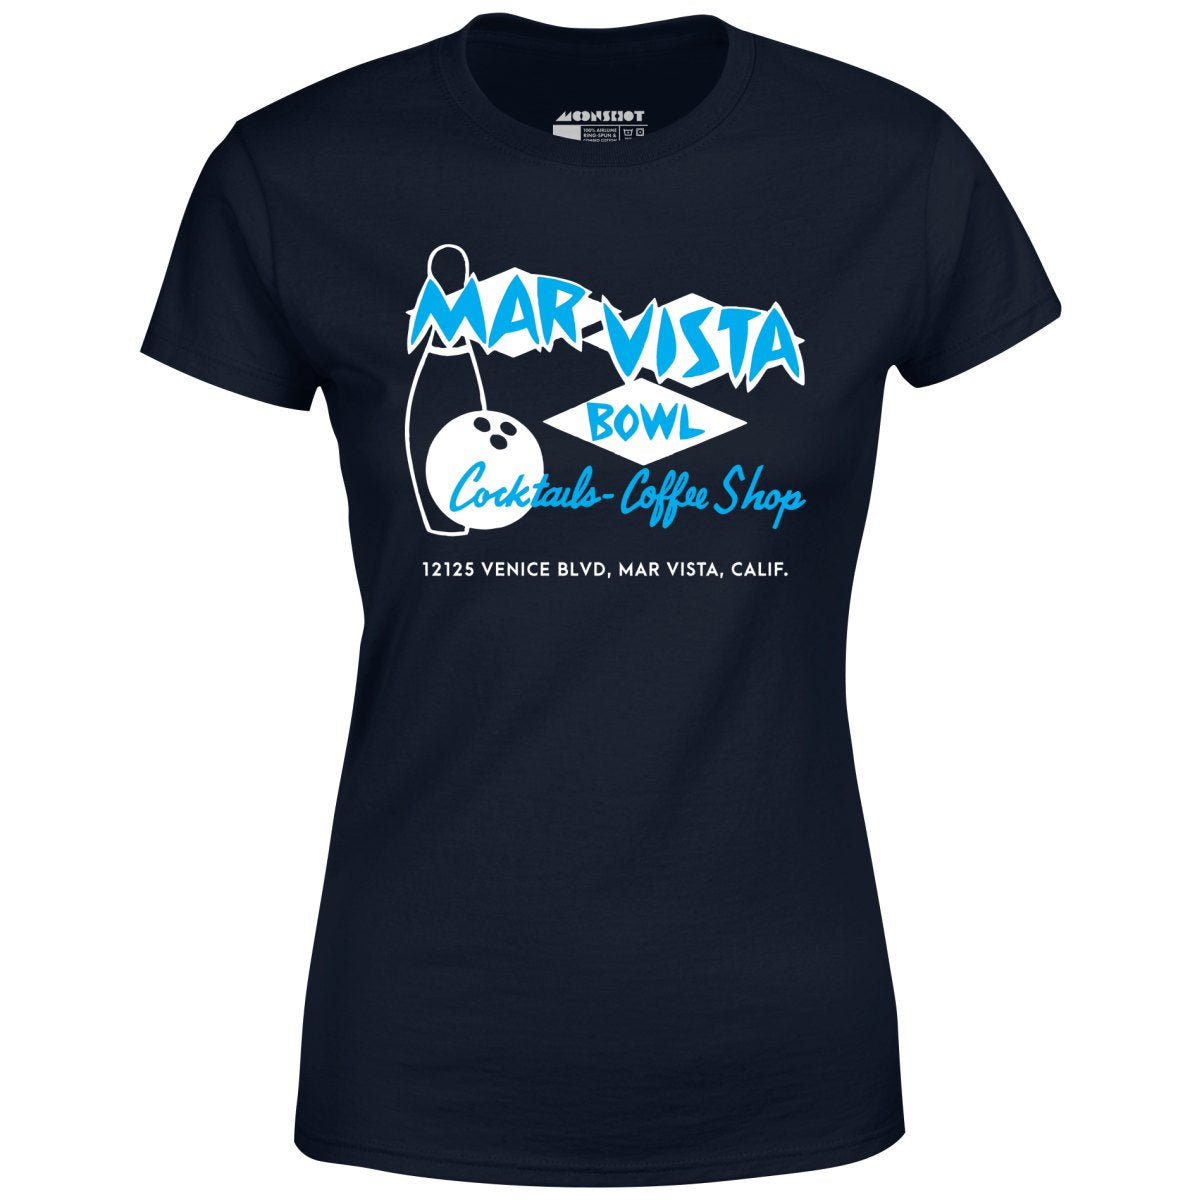 Mar Vista Bowl - Los Angeles, CA - Vintage Bowling Alley - Women's T-Shirt